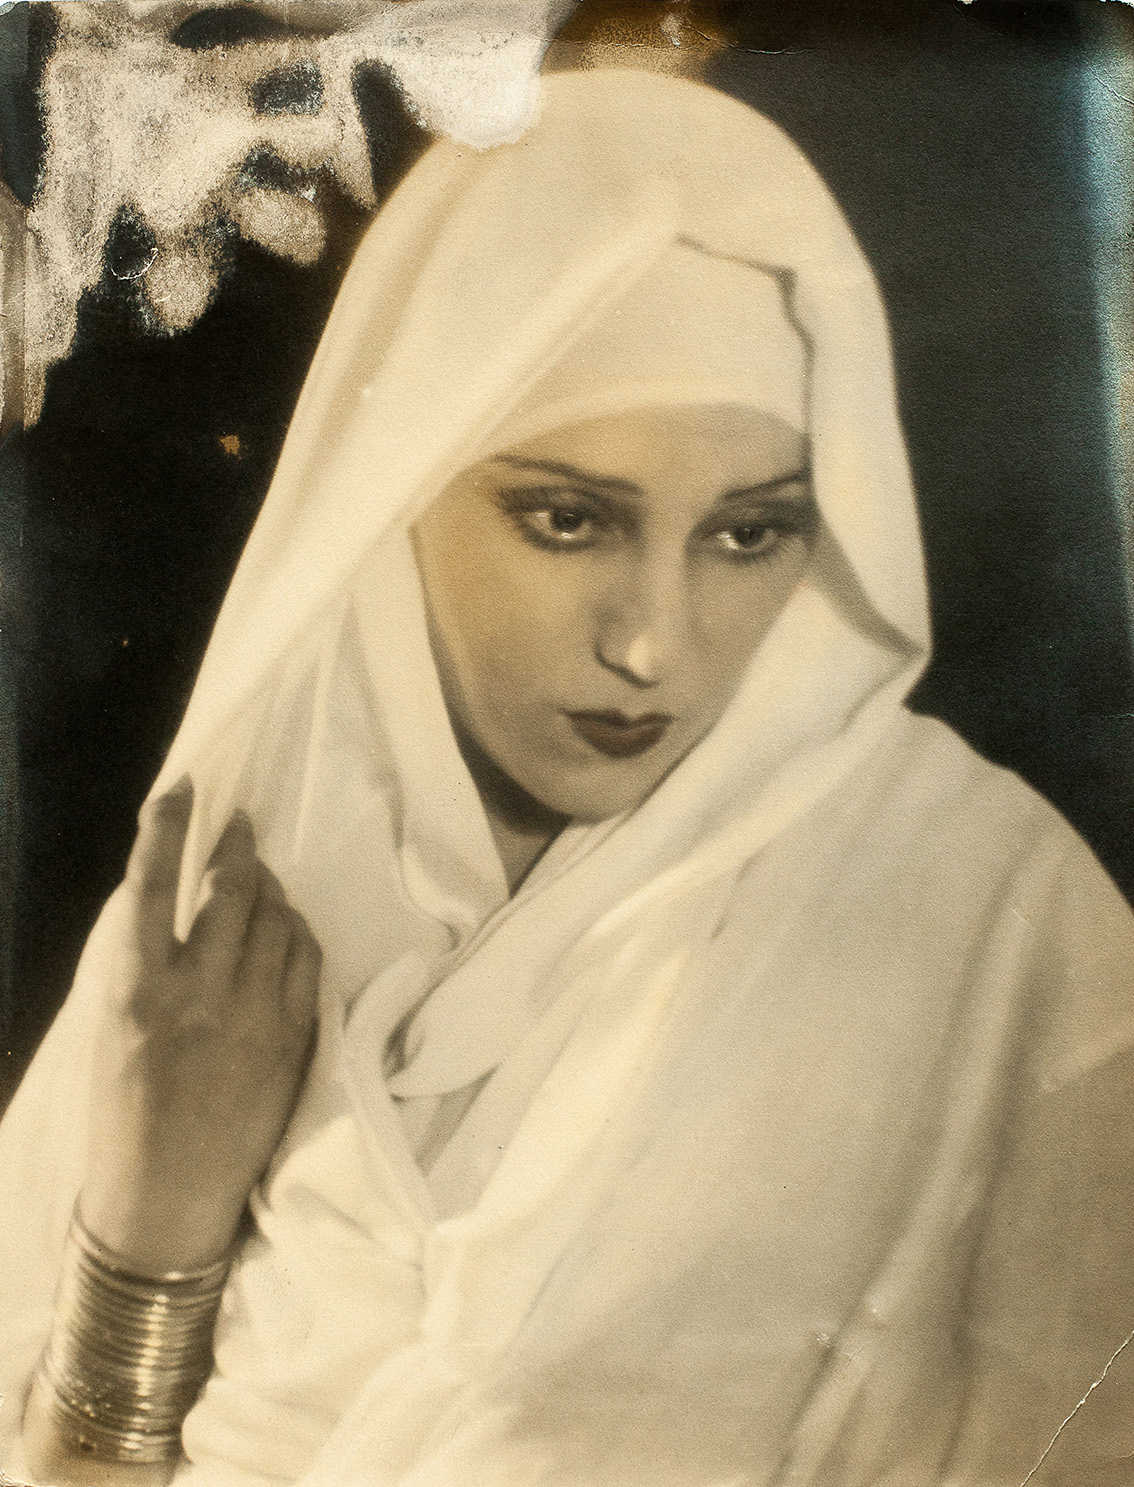 Ruben Sobol (1889-1944), Raquel Meller, around 1928, photograph published on the cover of Vu magazine in 1928.© Ruben Sobol/BNF, Performin